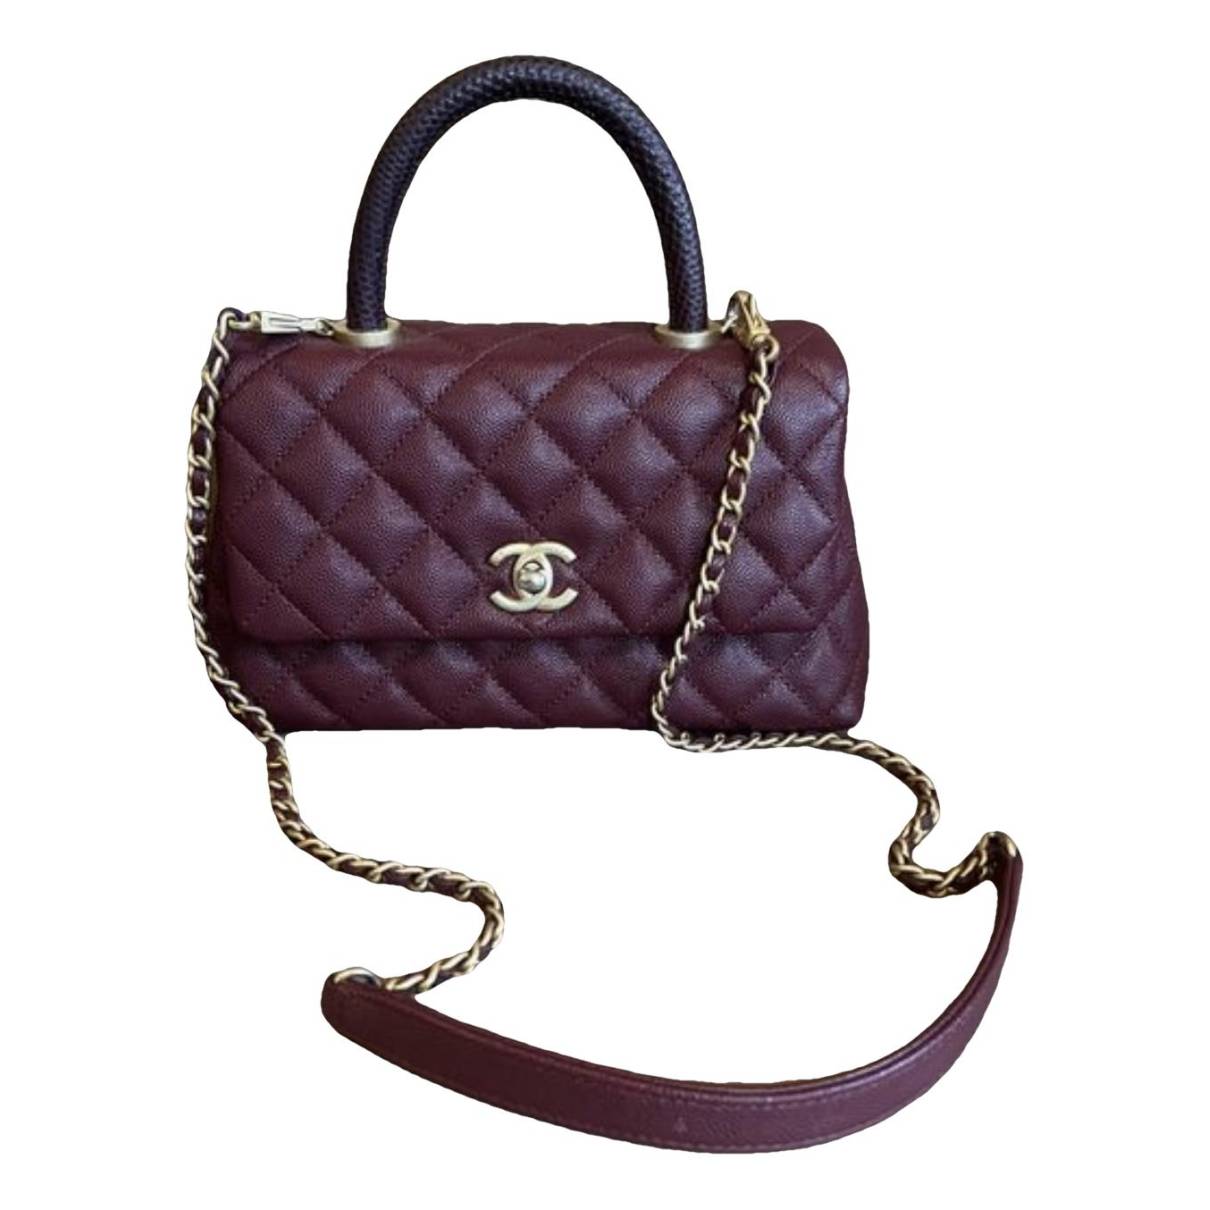 Coco handle leather handbag Chanel Burgundy in Leather - 36891645